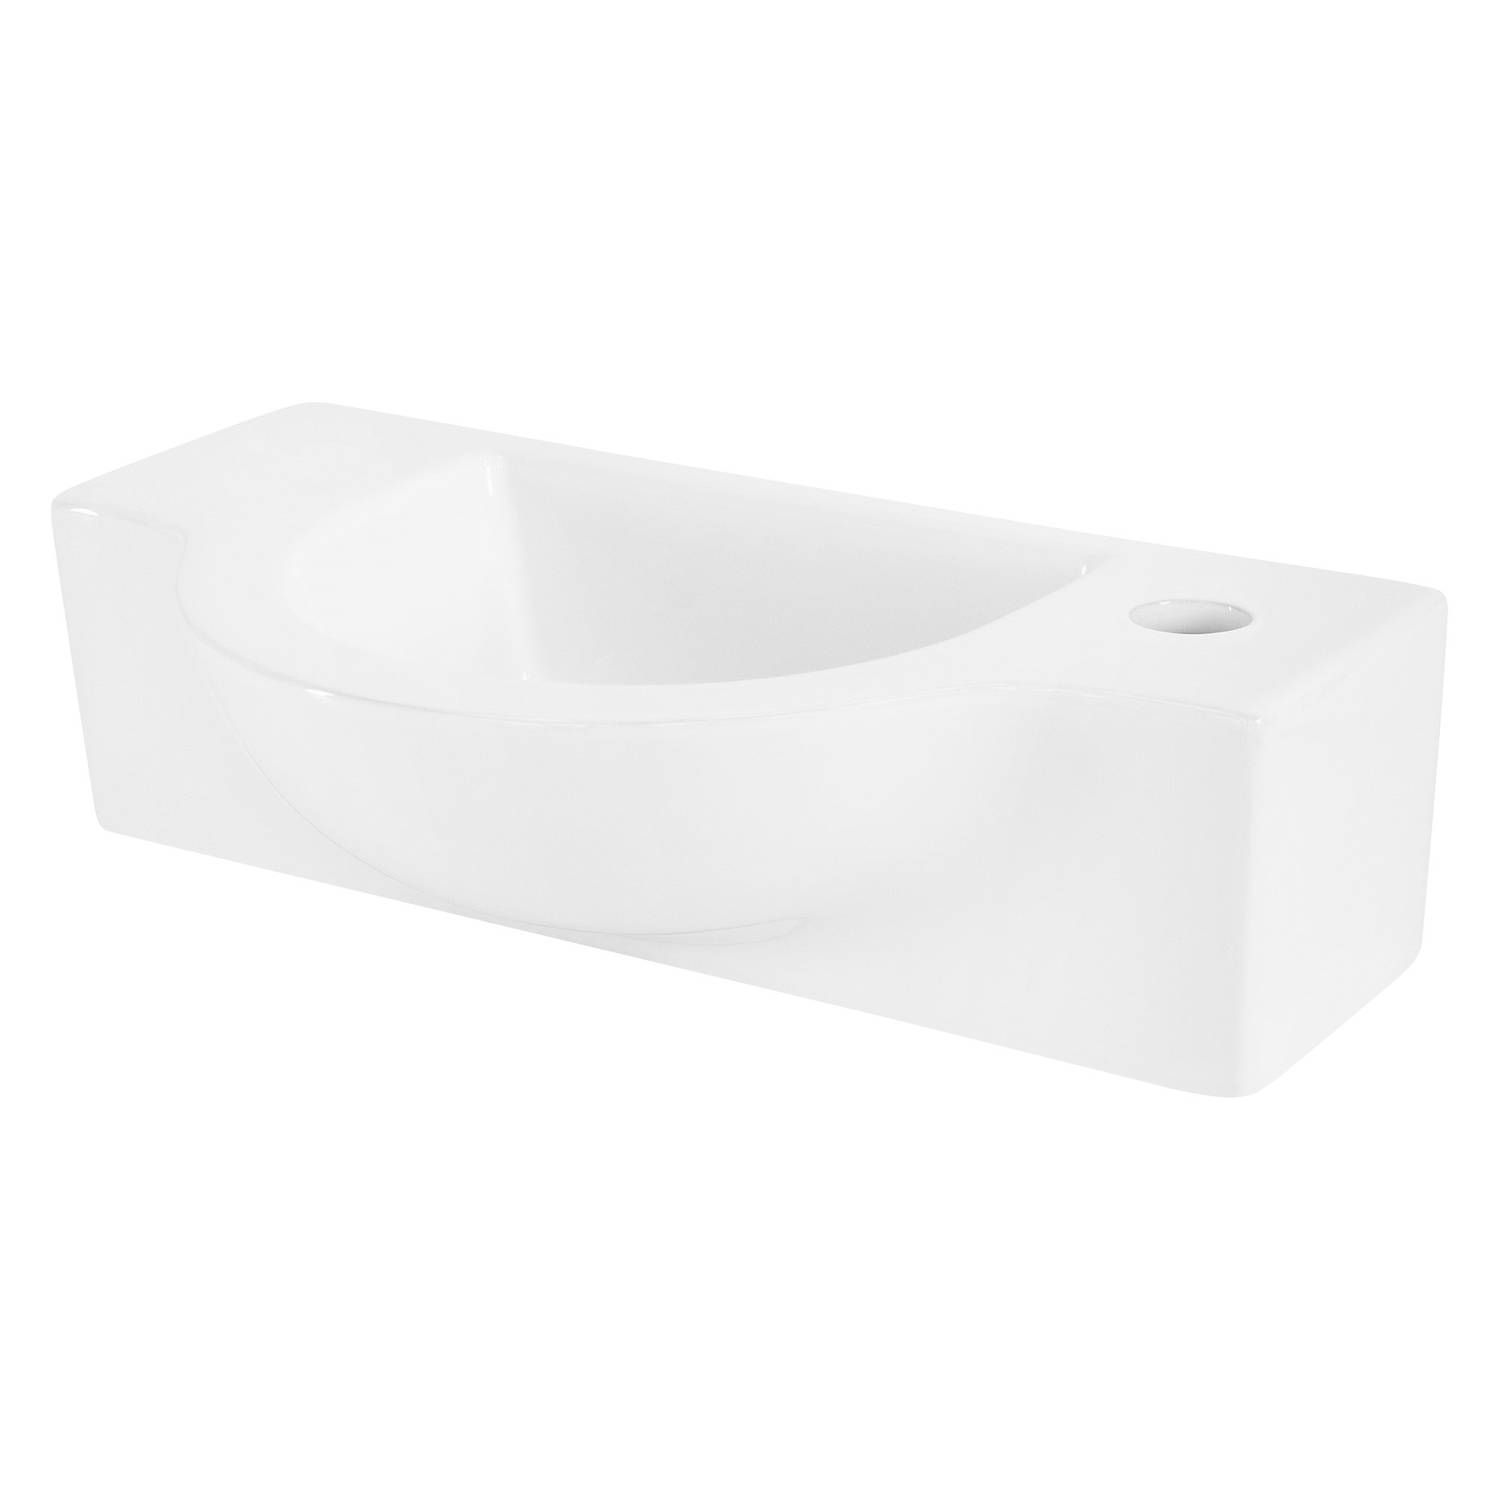 ML-Design keramische wastafel in wit, 44,5x25,5x12 cm, ovaal, klein, kraangat rechts, wand- of opzetwastafel, moderne wastafel waskom handwasbak, voor badkamers